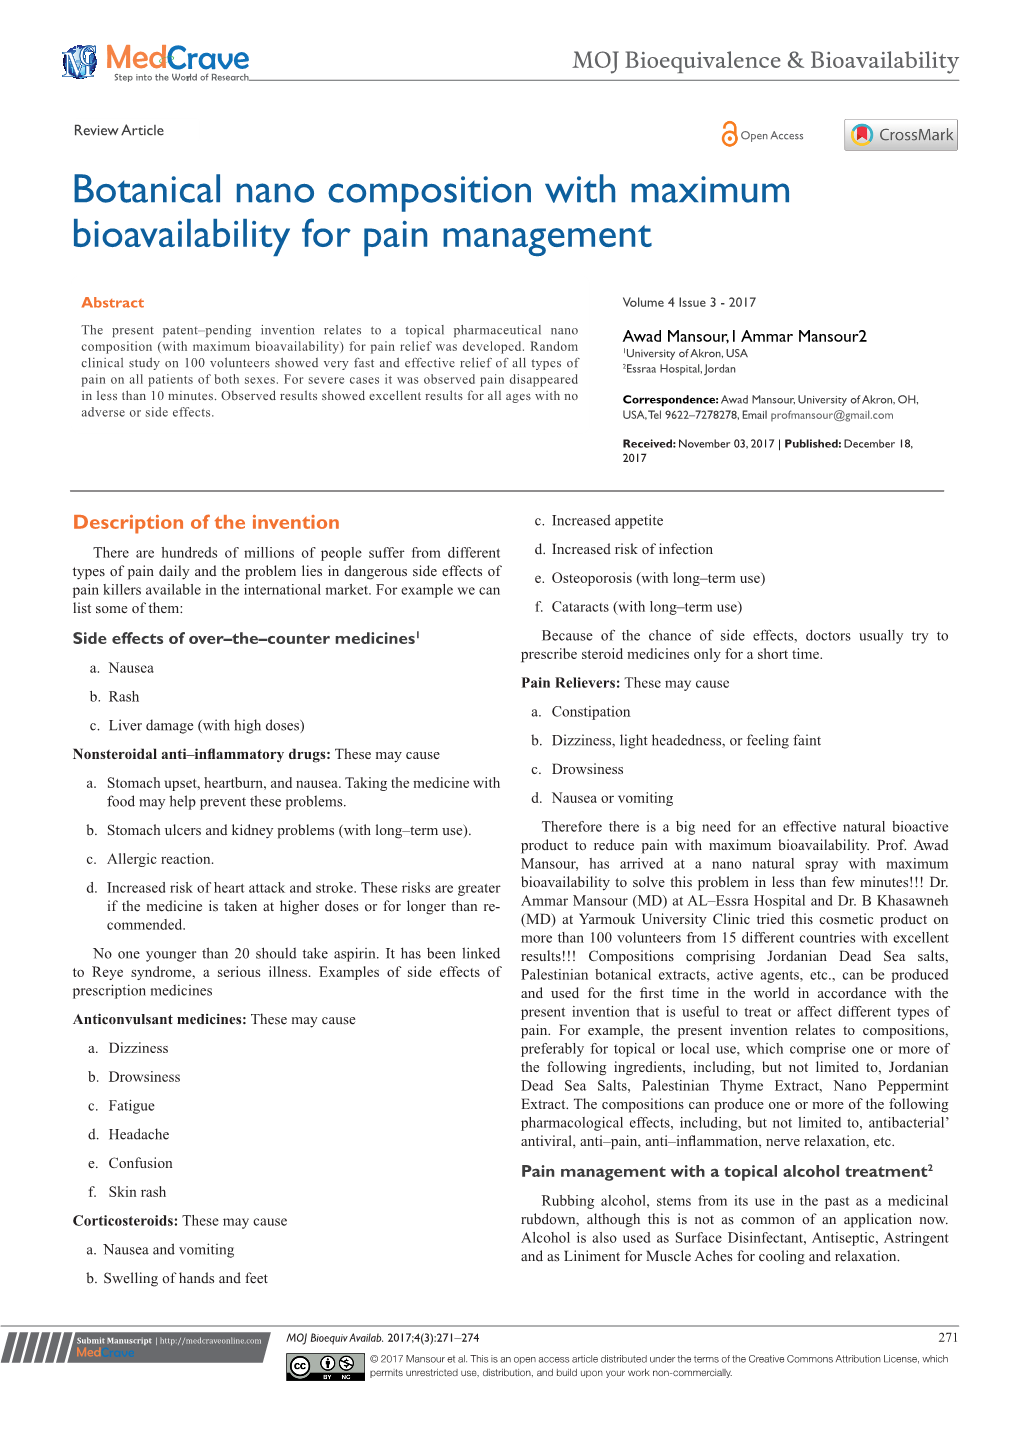 Botanical Nano Composition with Maximum Bioavailability for Pain Management